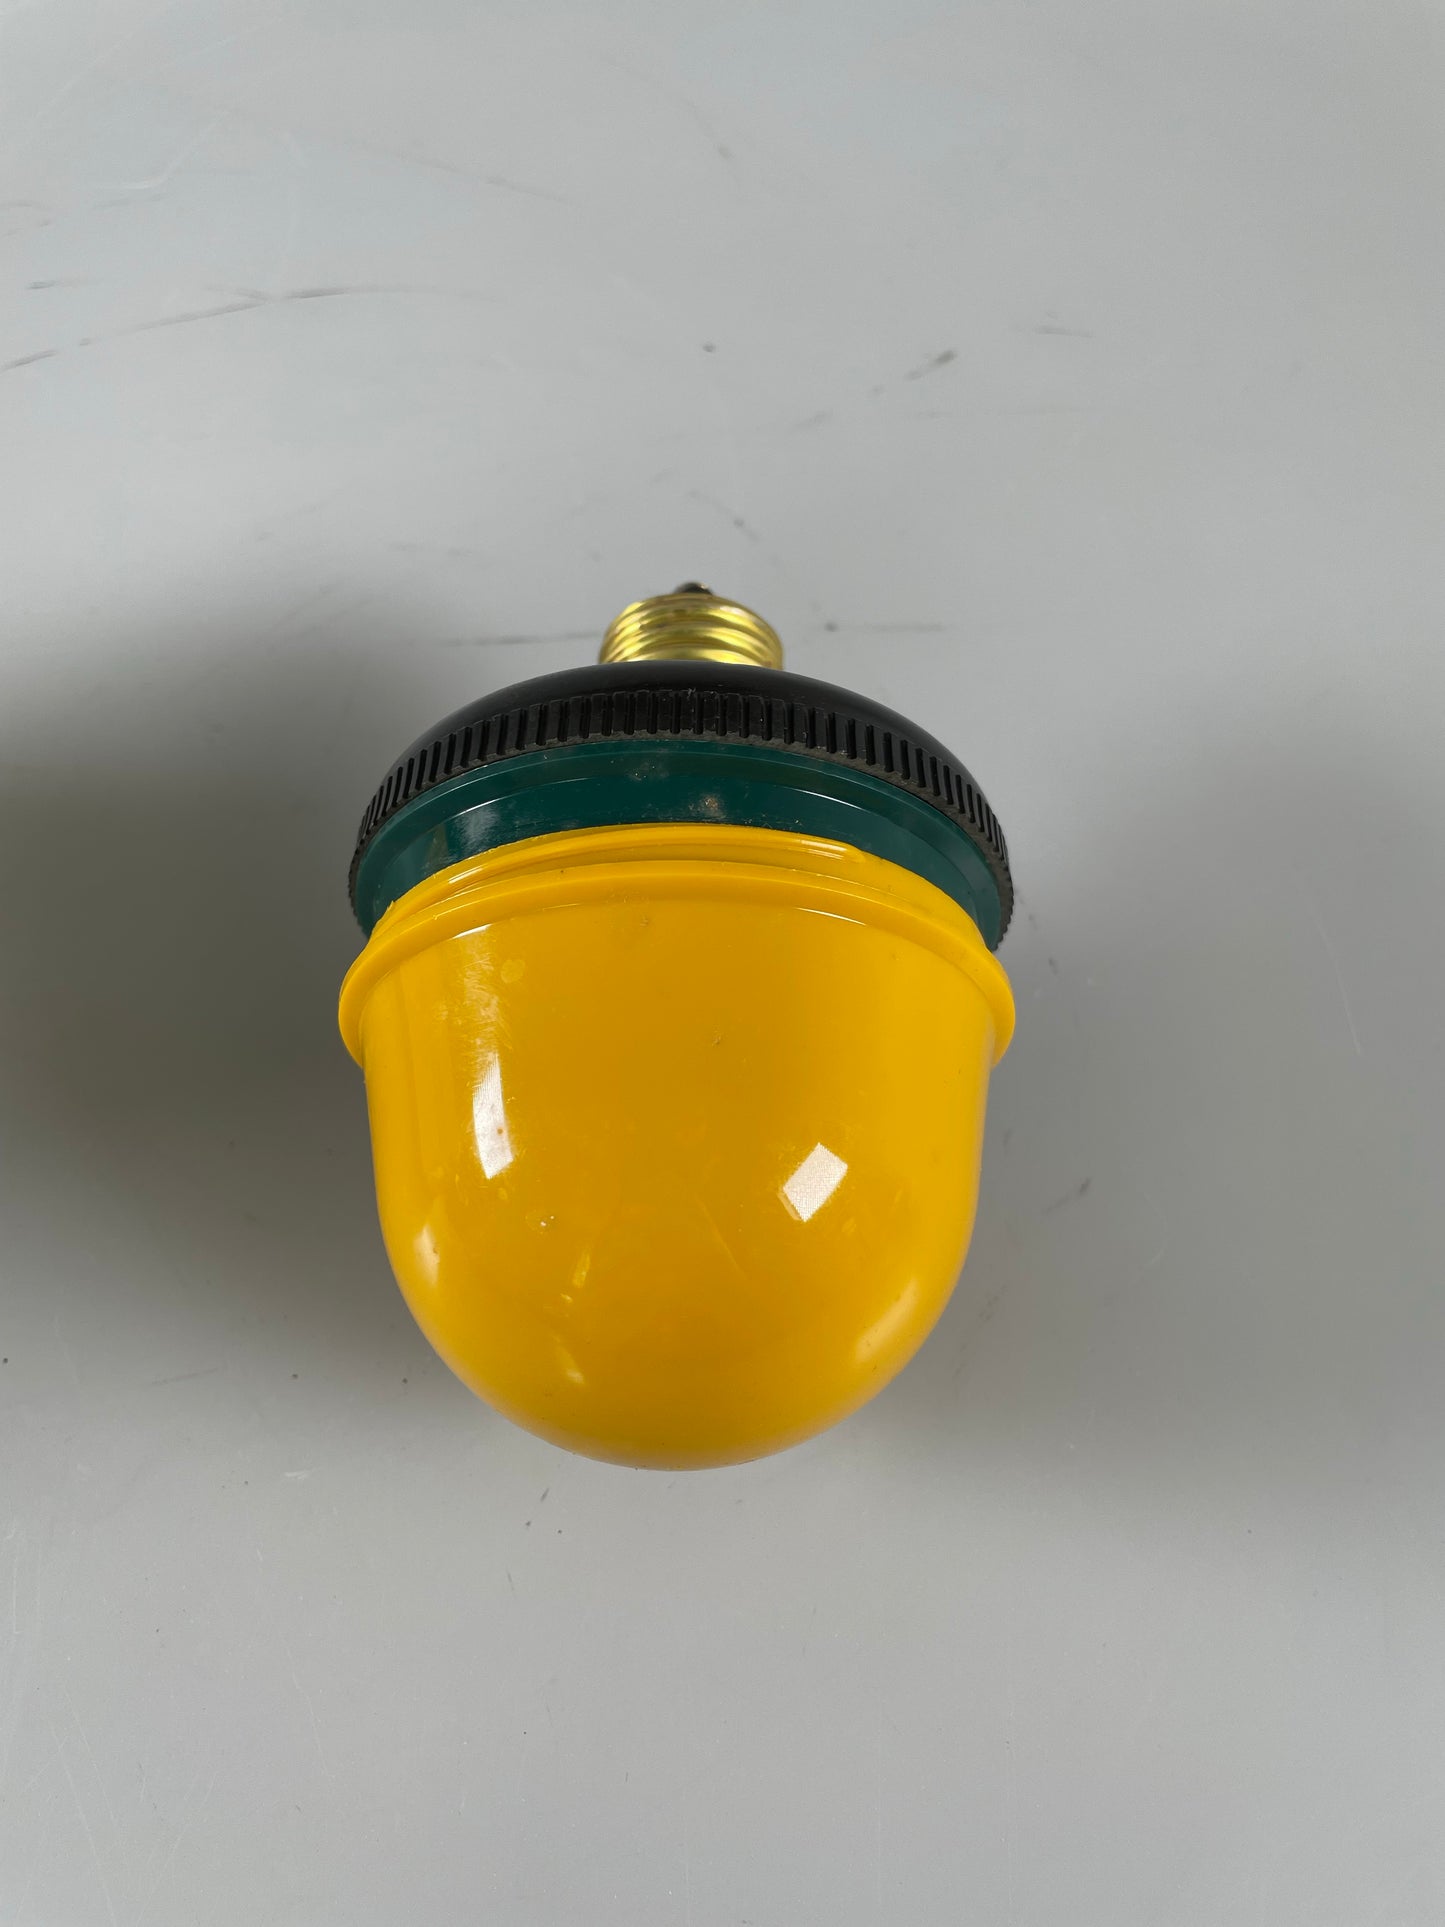 Kodak Brownie Darkroom Lamp Kit, Model B Yellow & Green Cups Darkroom